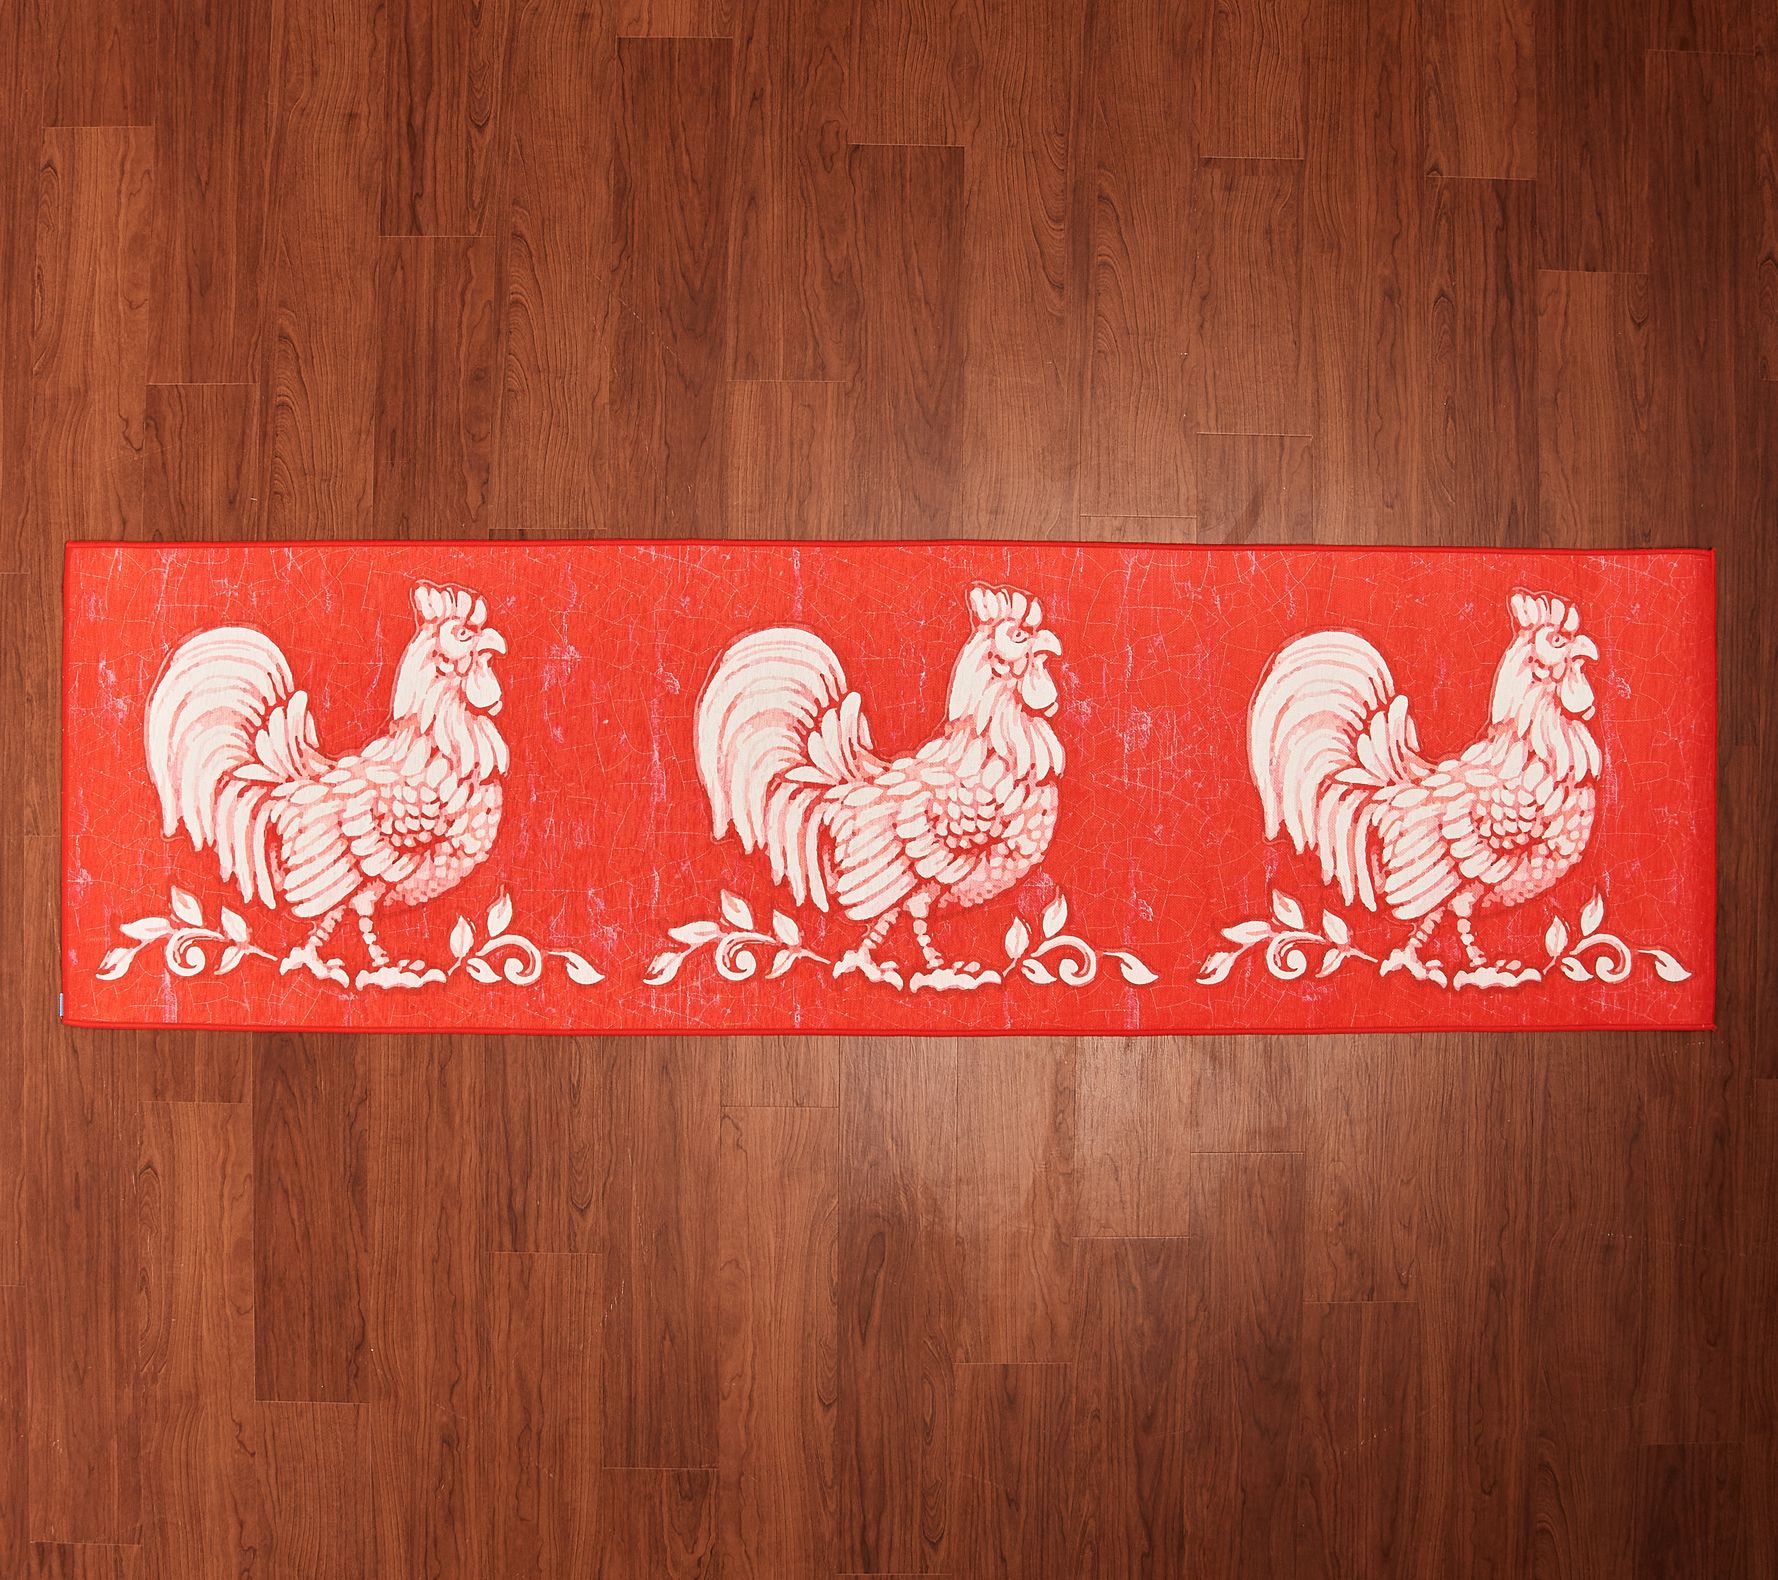 Chicken Print Kitchen Mat For Floor Anti-slip Hallway Balcony Rugs